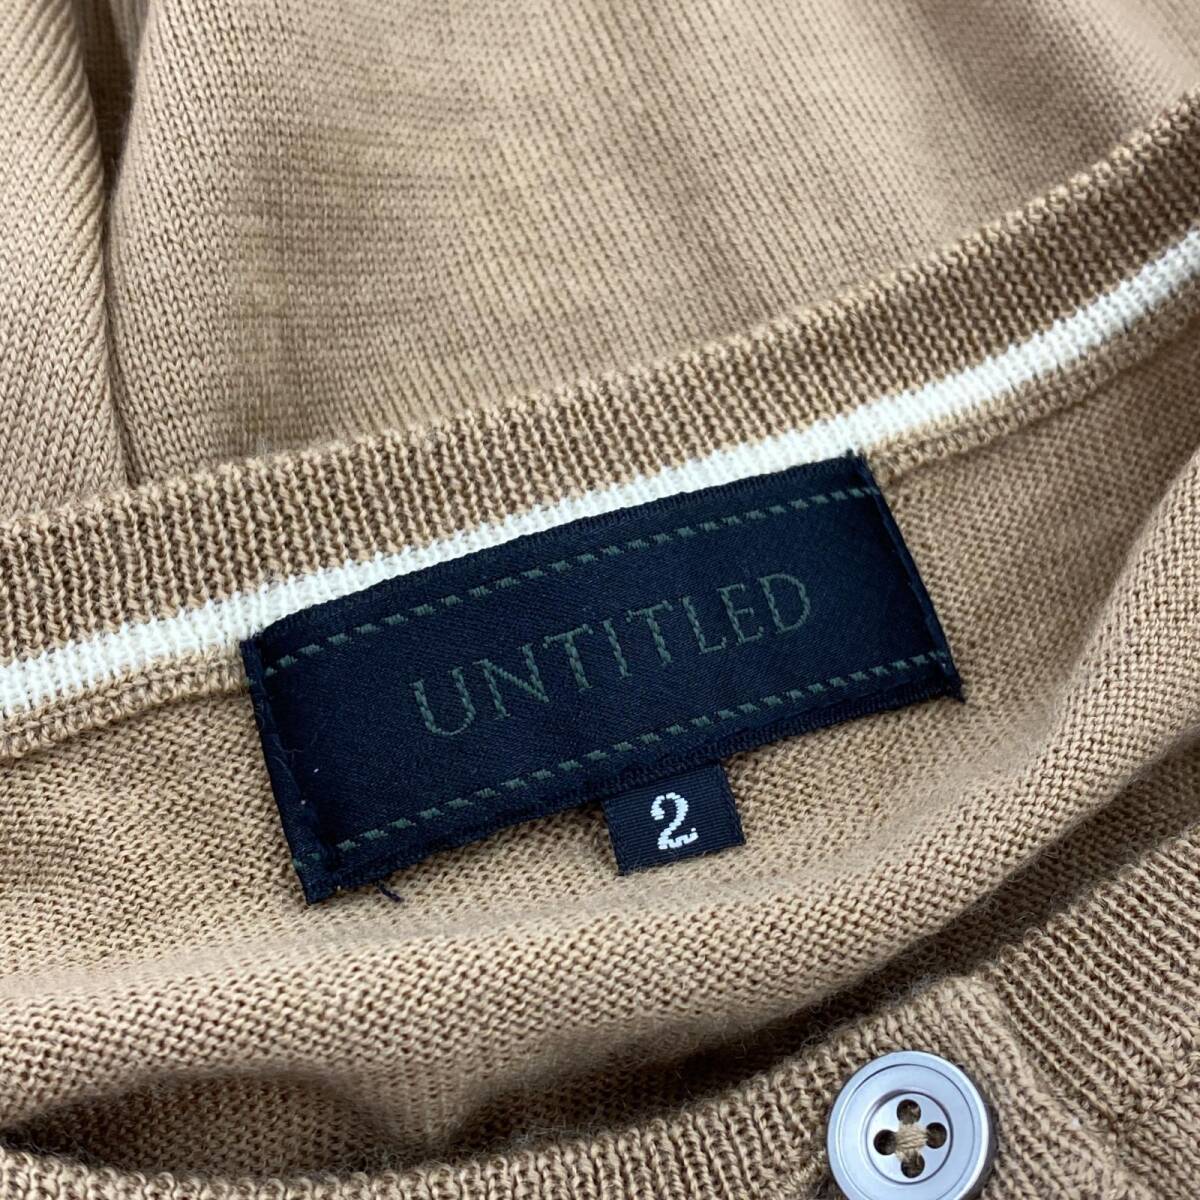 yu. packet OK UNTITLED Untitled wool 100% cardigan size2/ beige lady's 